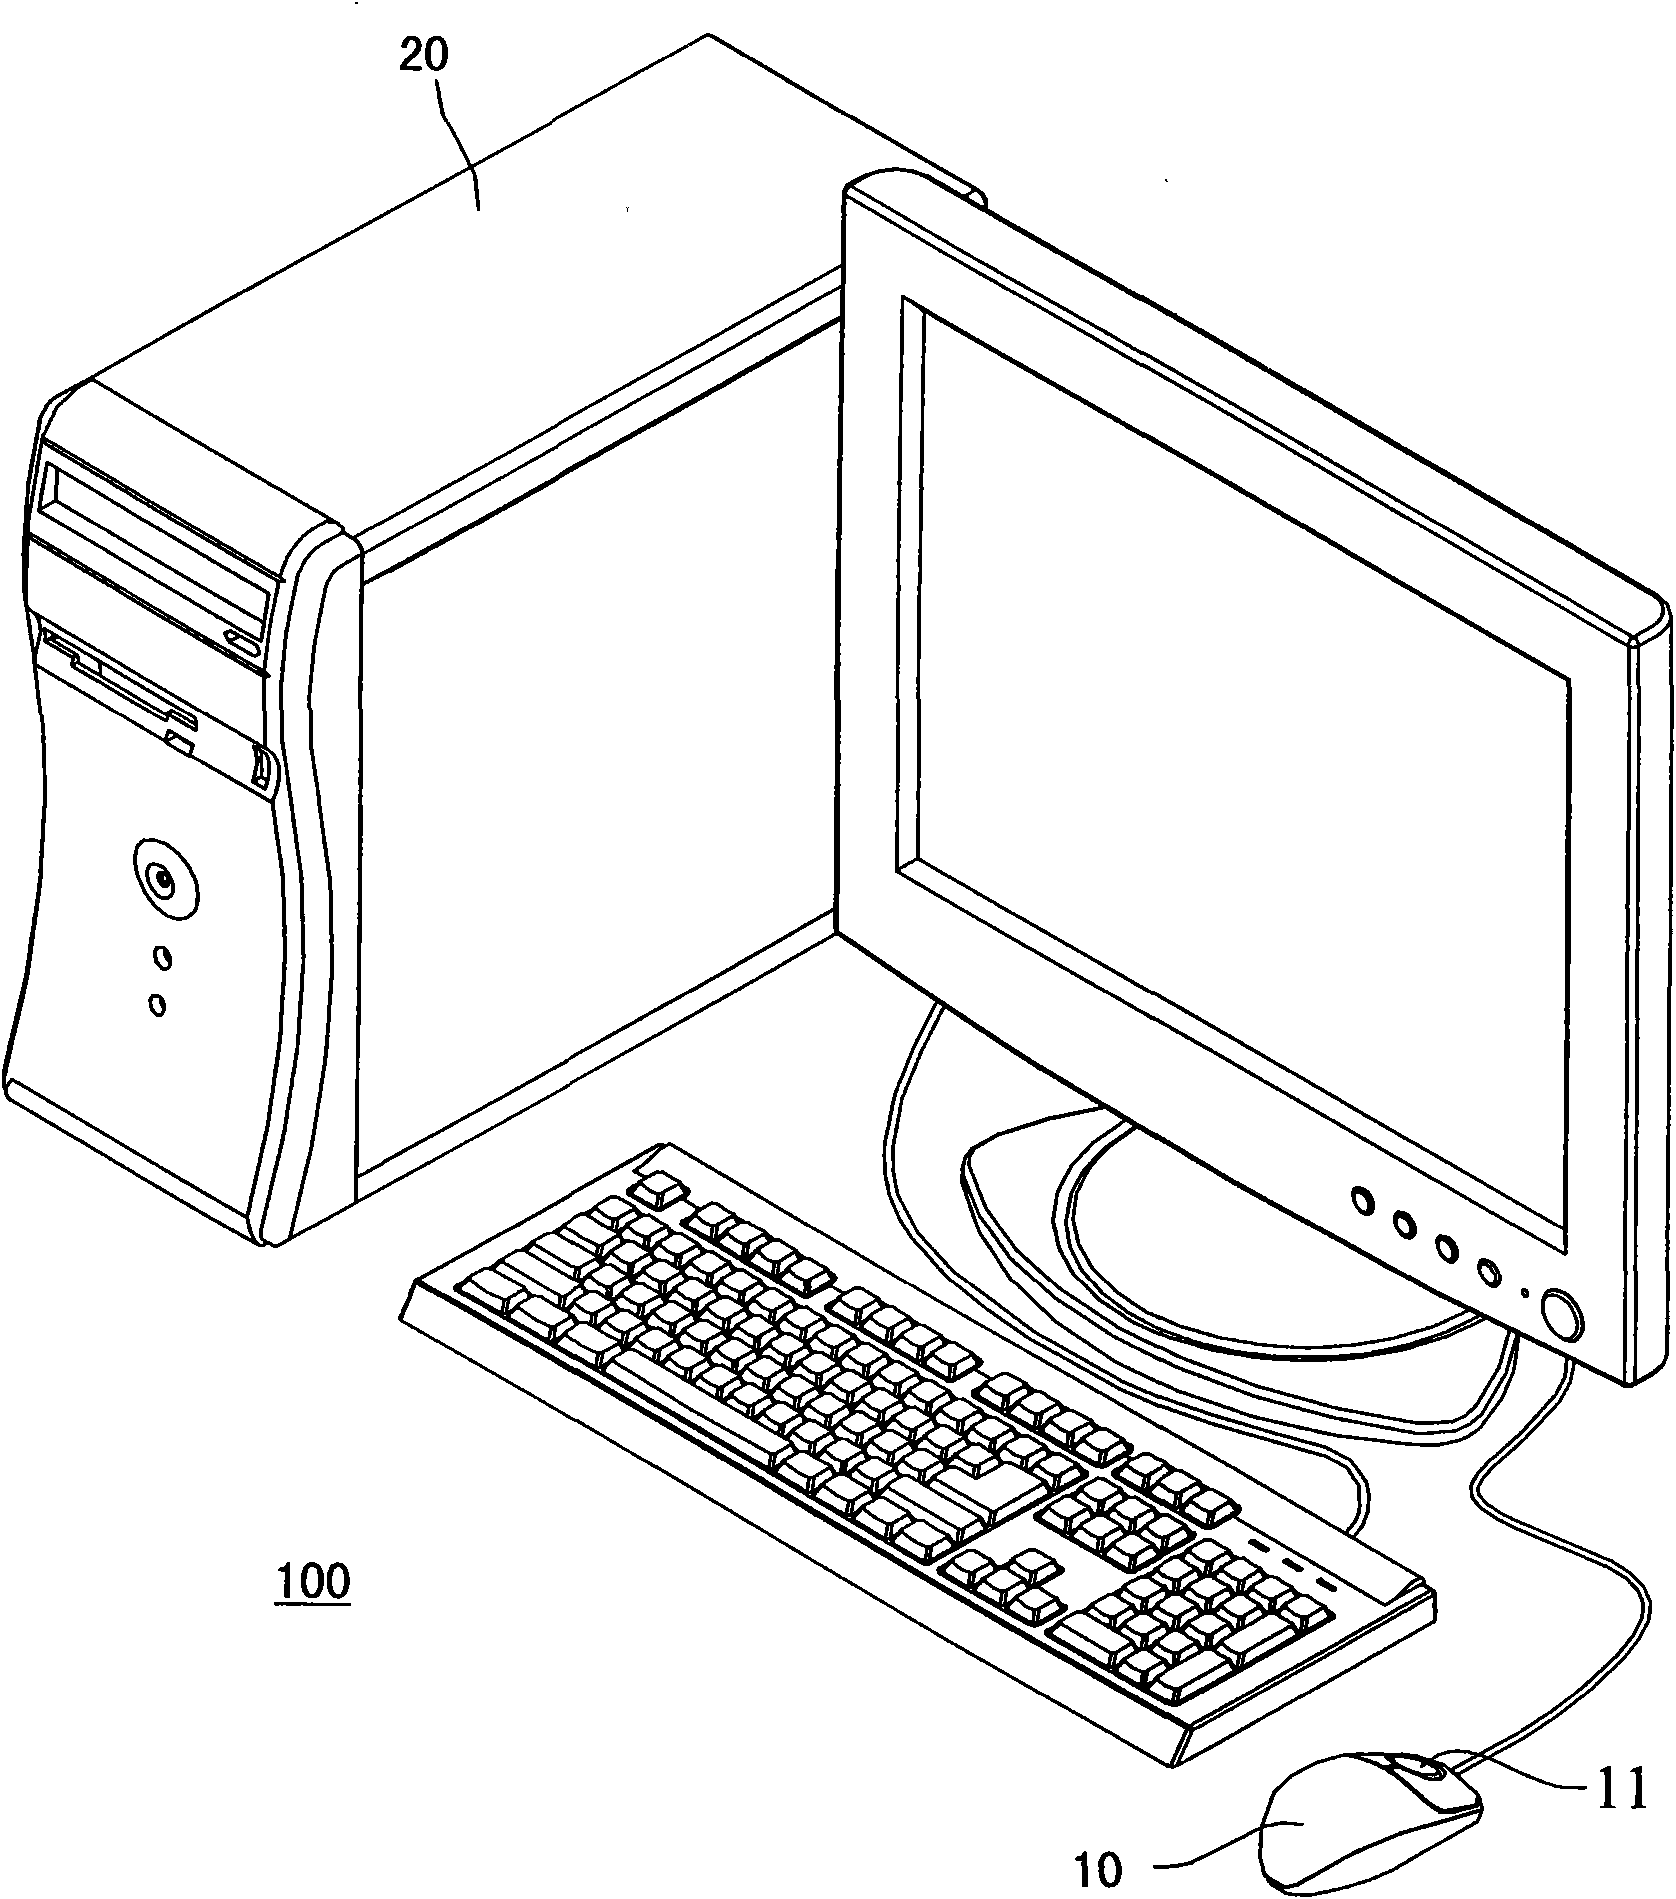 Computer input unit, dual-spectrum data input processing method and sensor thereof